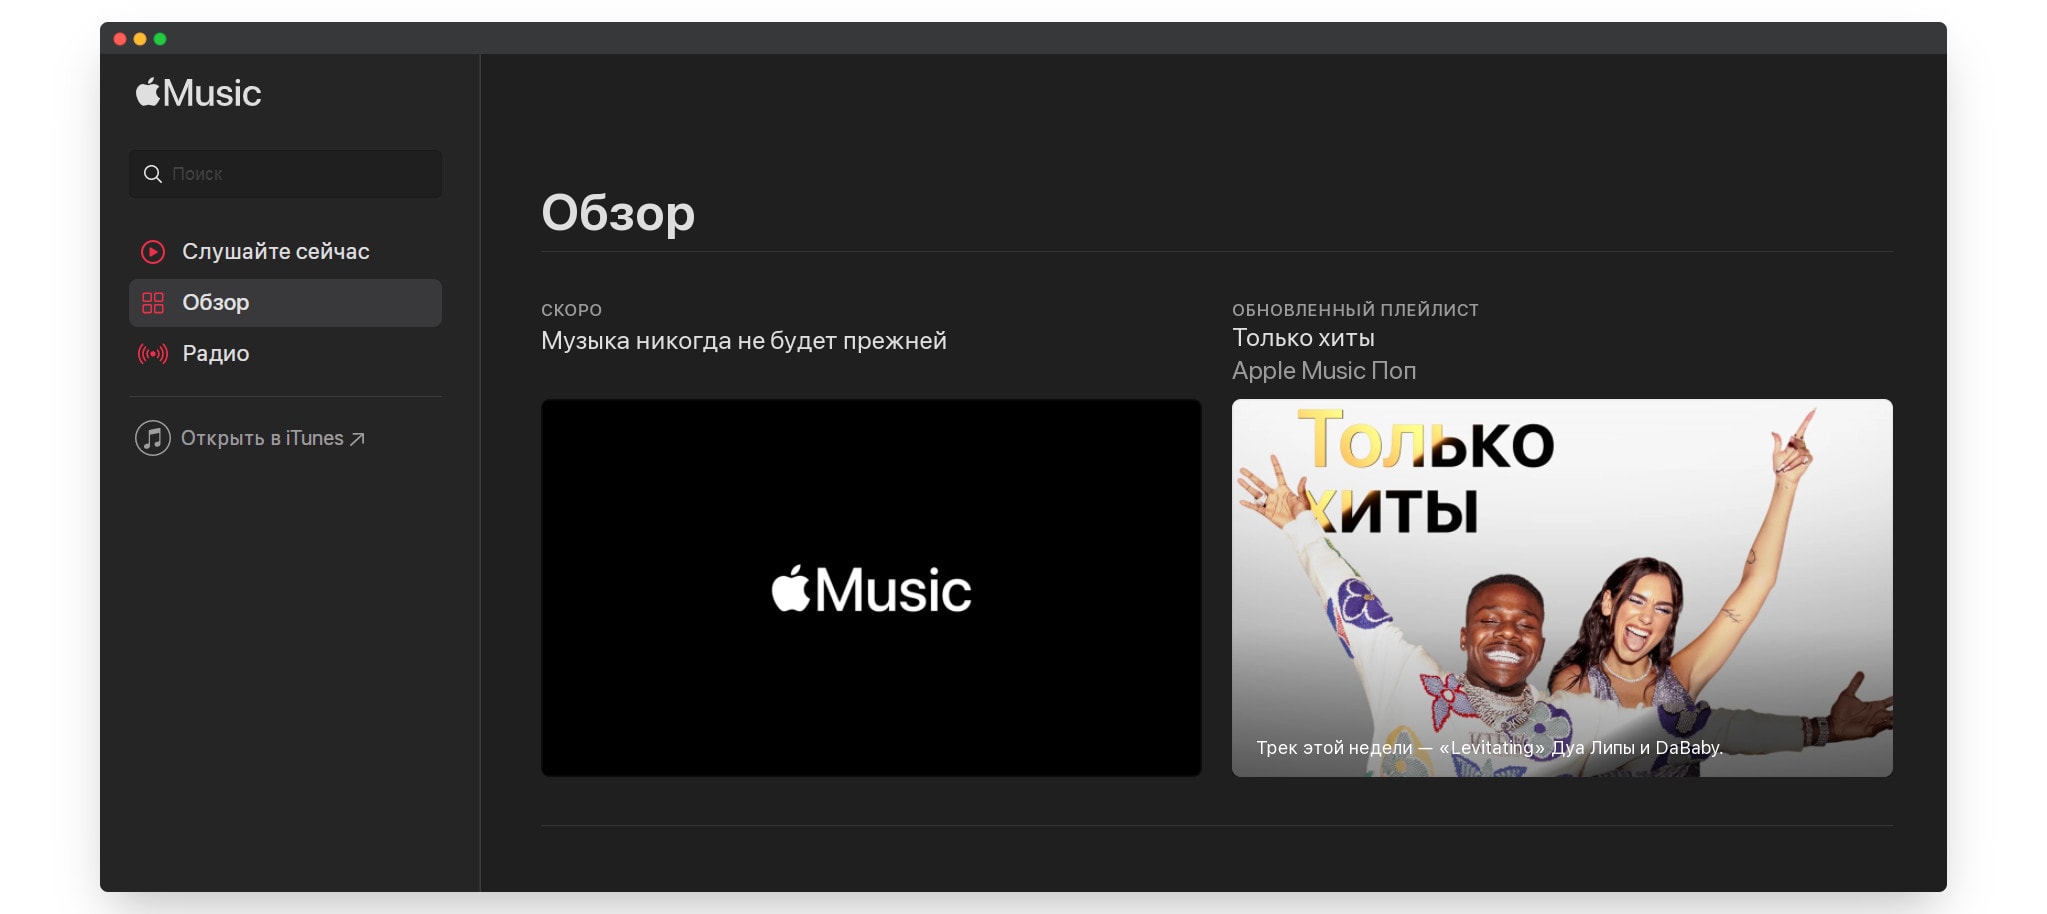 Слушать музыку меняй. Слушать в Apple Music. Слушайте в Apple Music. Музыка для обзора.